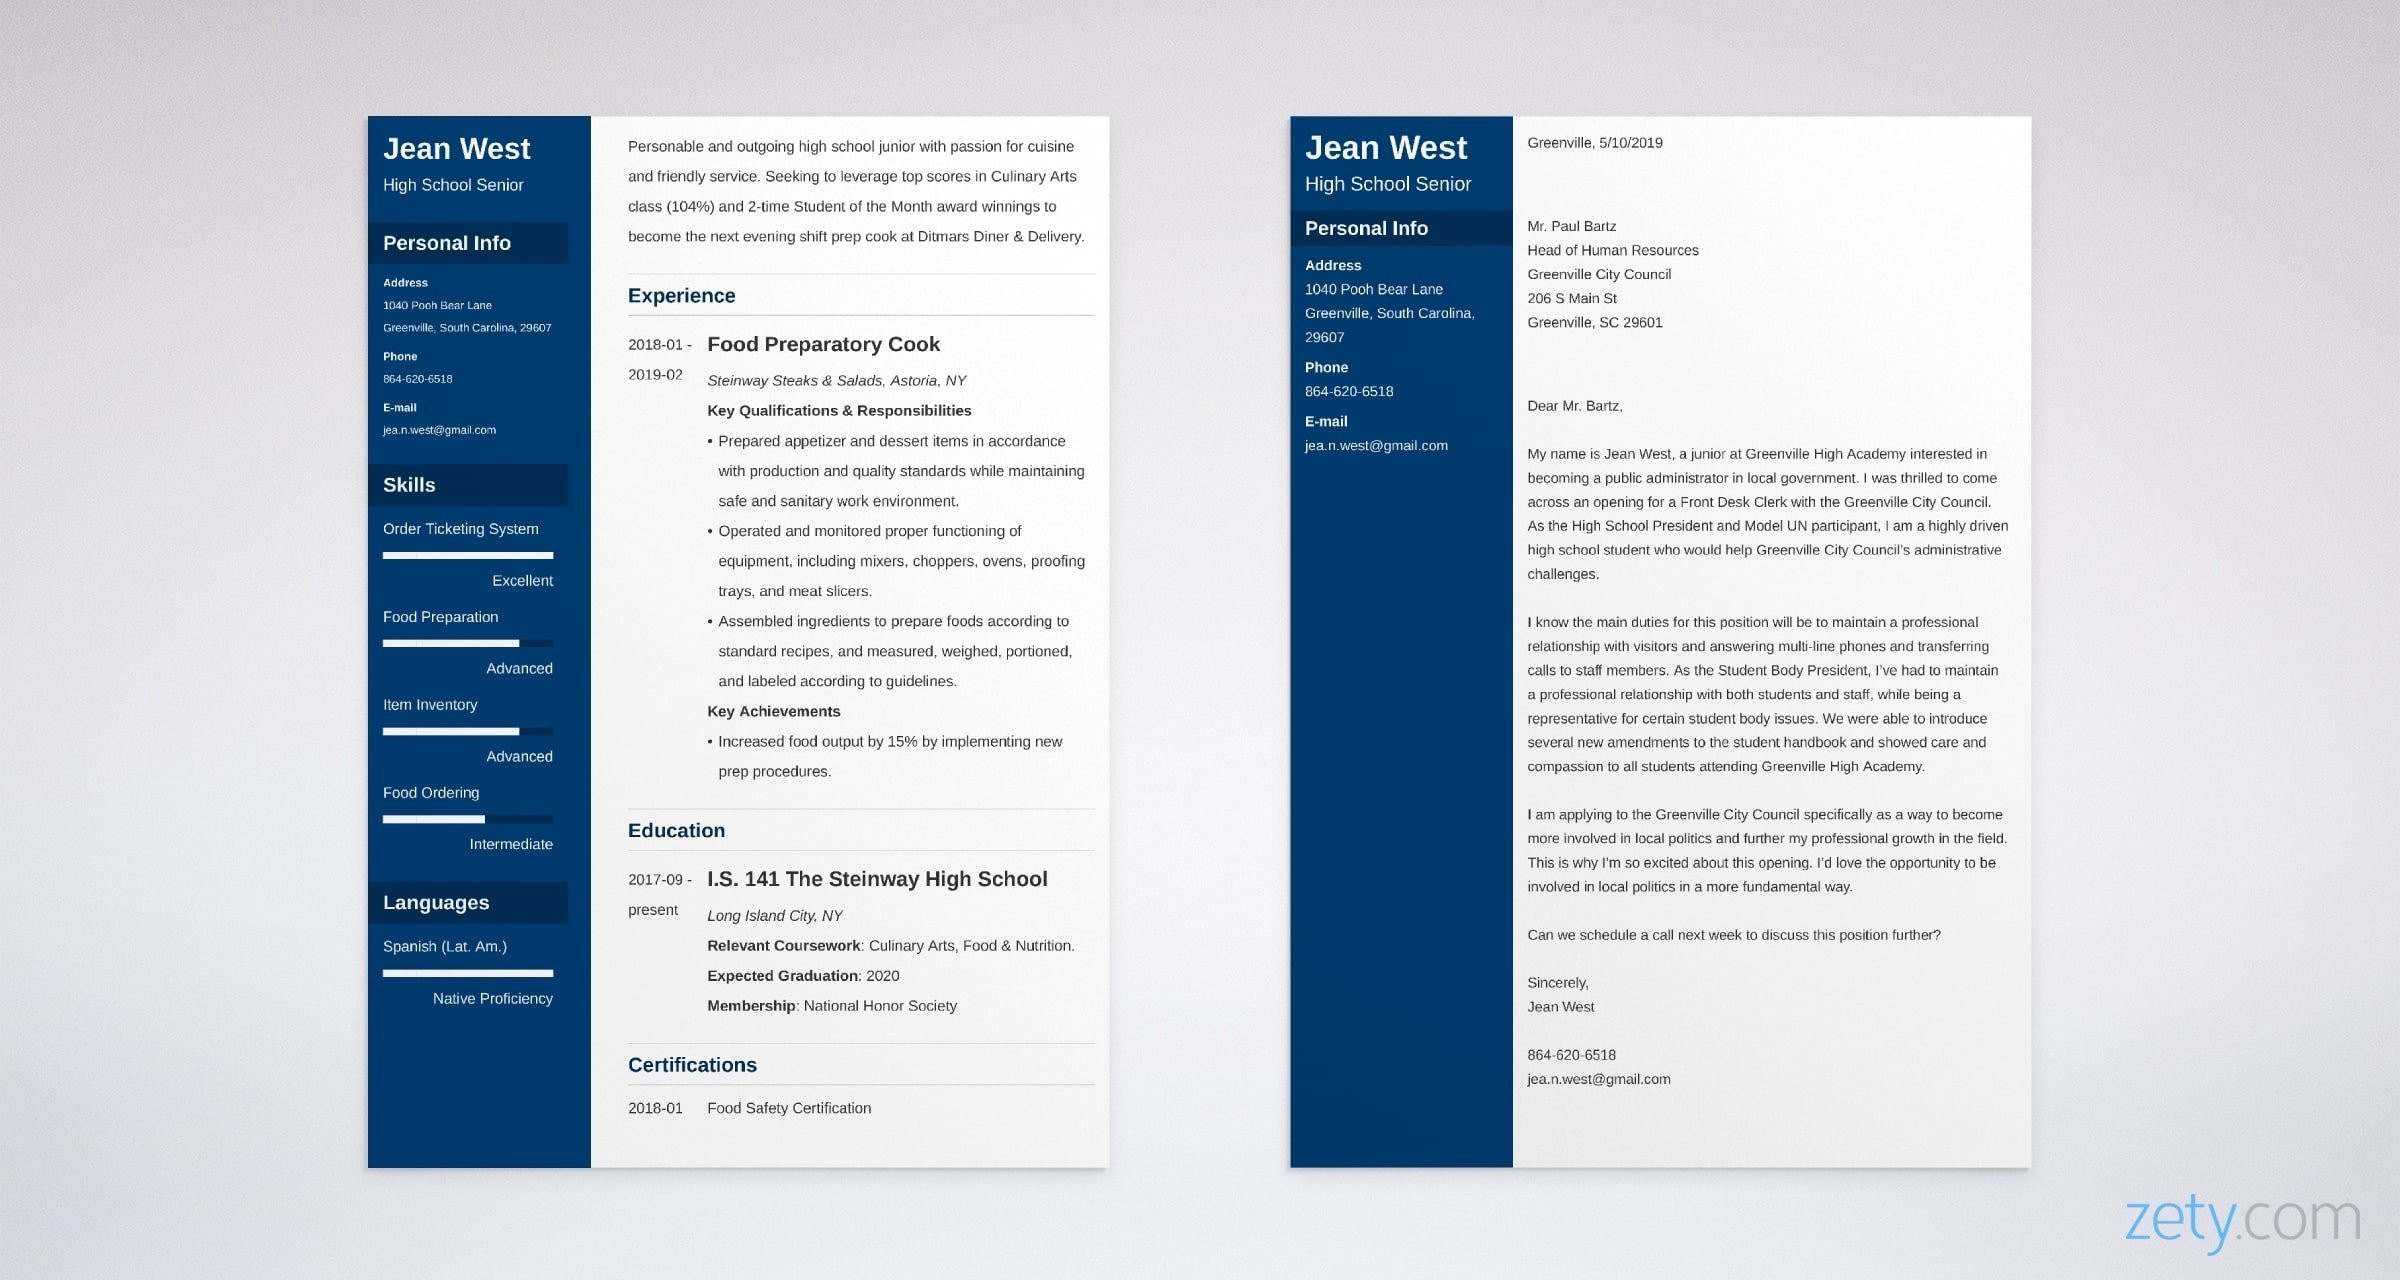 High School Resume Cover Letter Sample High School Cover Letter: Samples, Proper format, & Guide